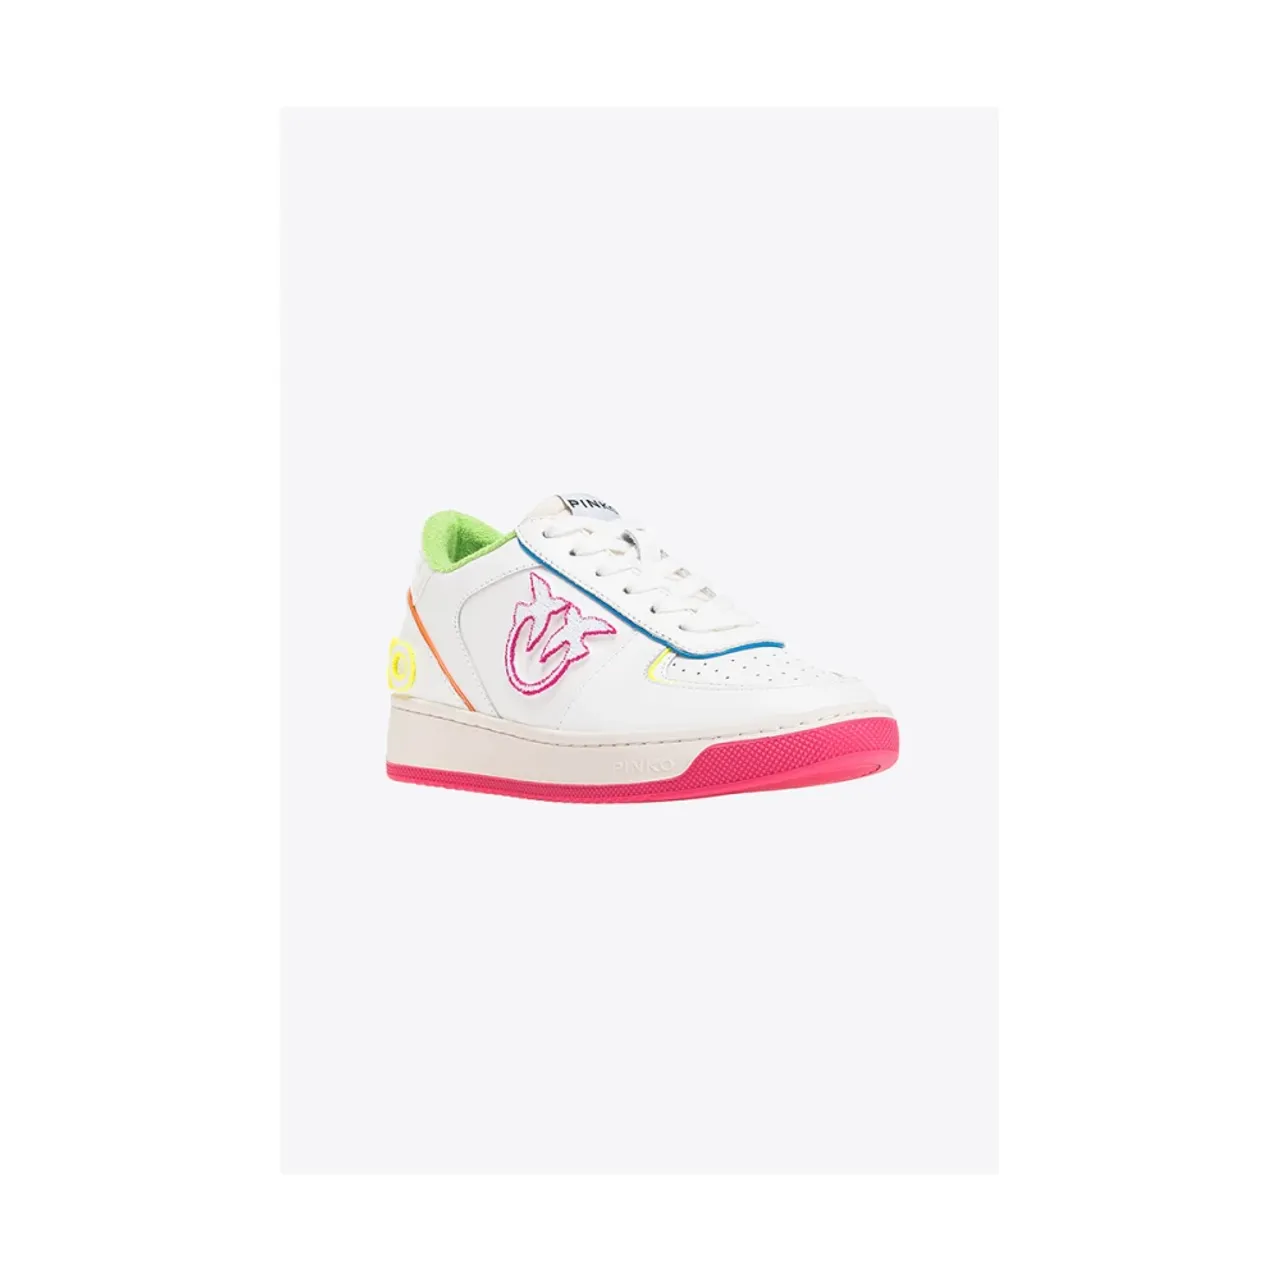 Neon Kontrast Leder Basket Sneakers Pinko